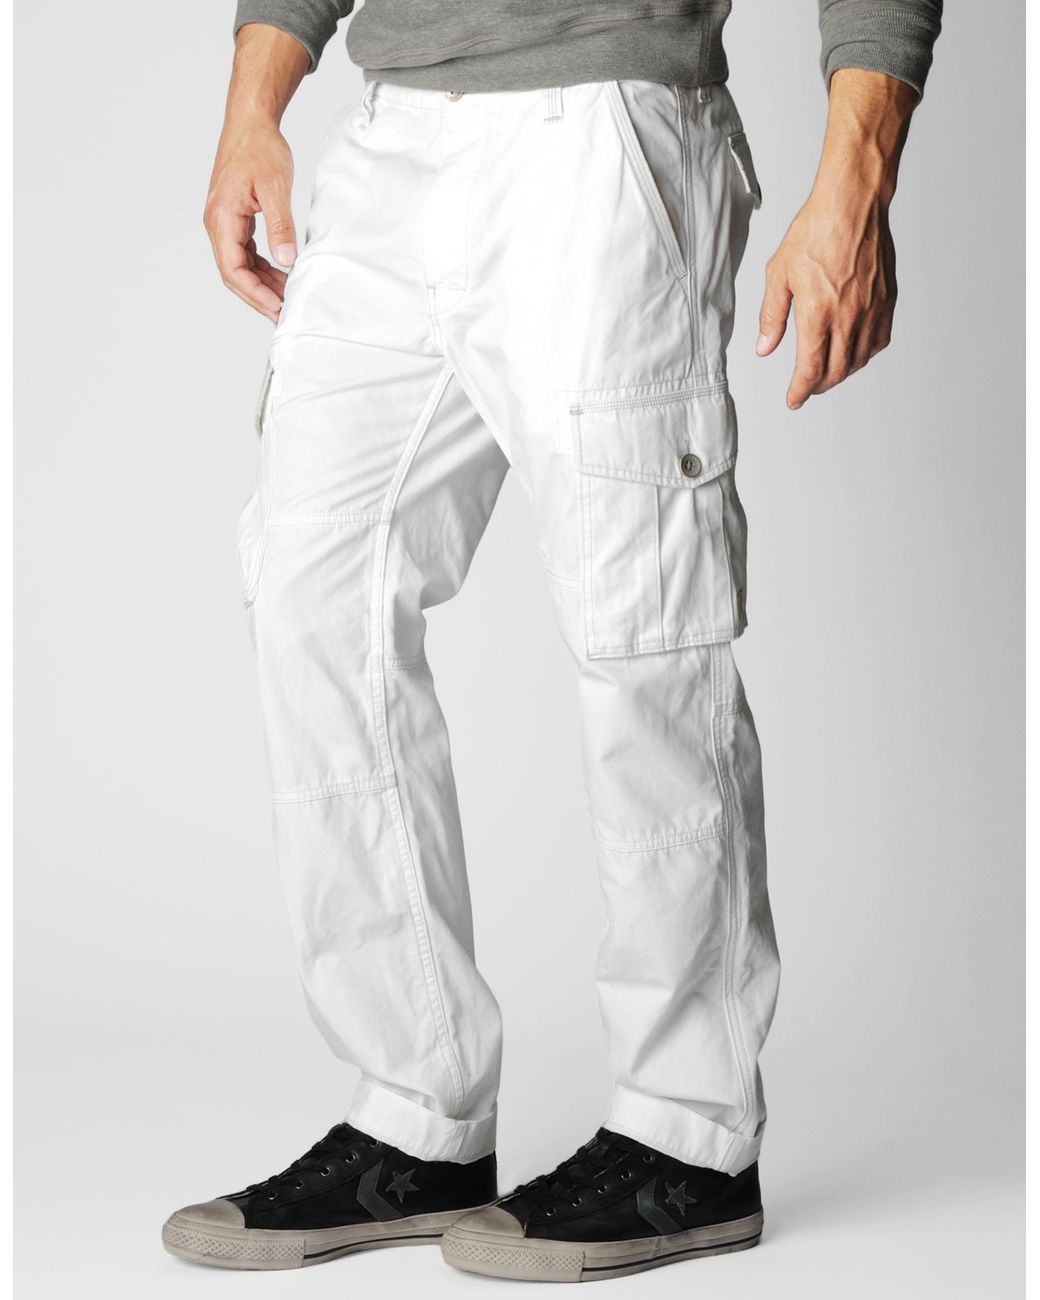 Women's White Cargo Pants Low Rise | Ally Fashion